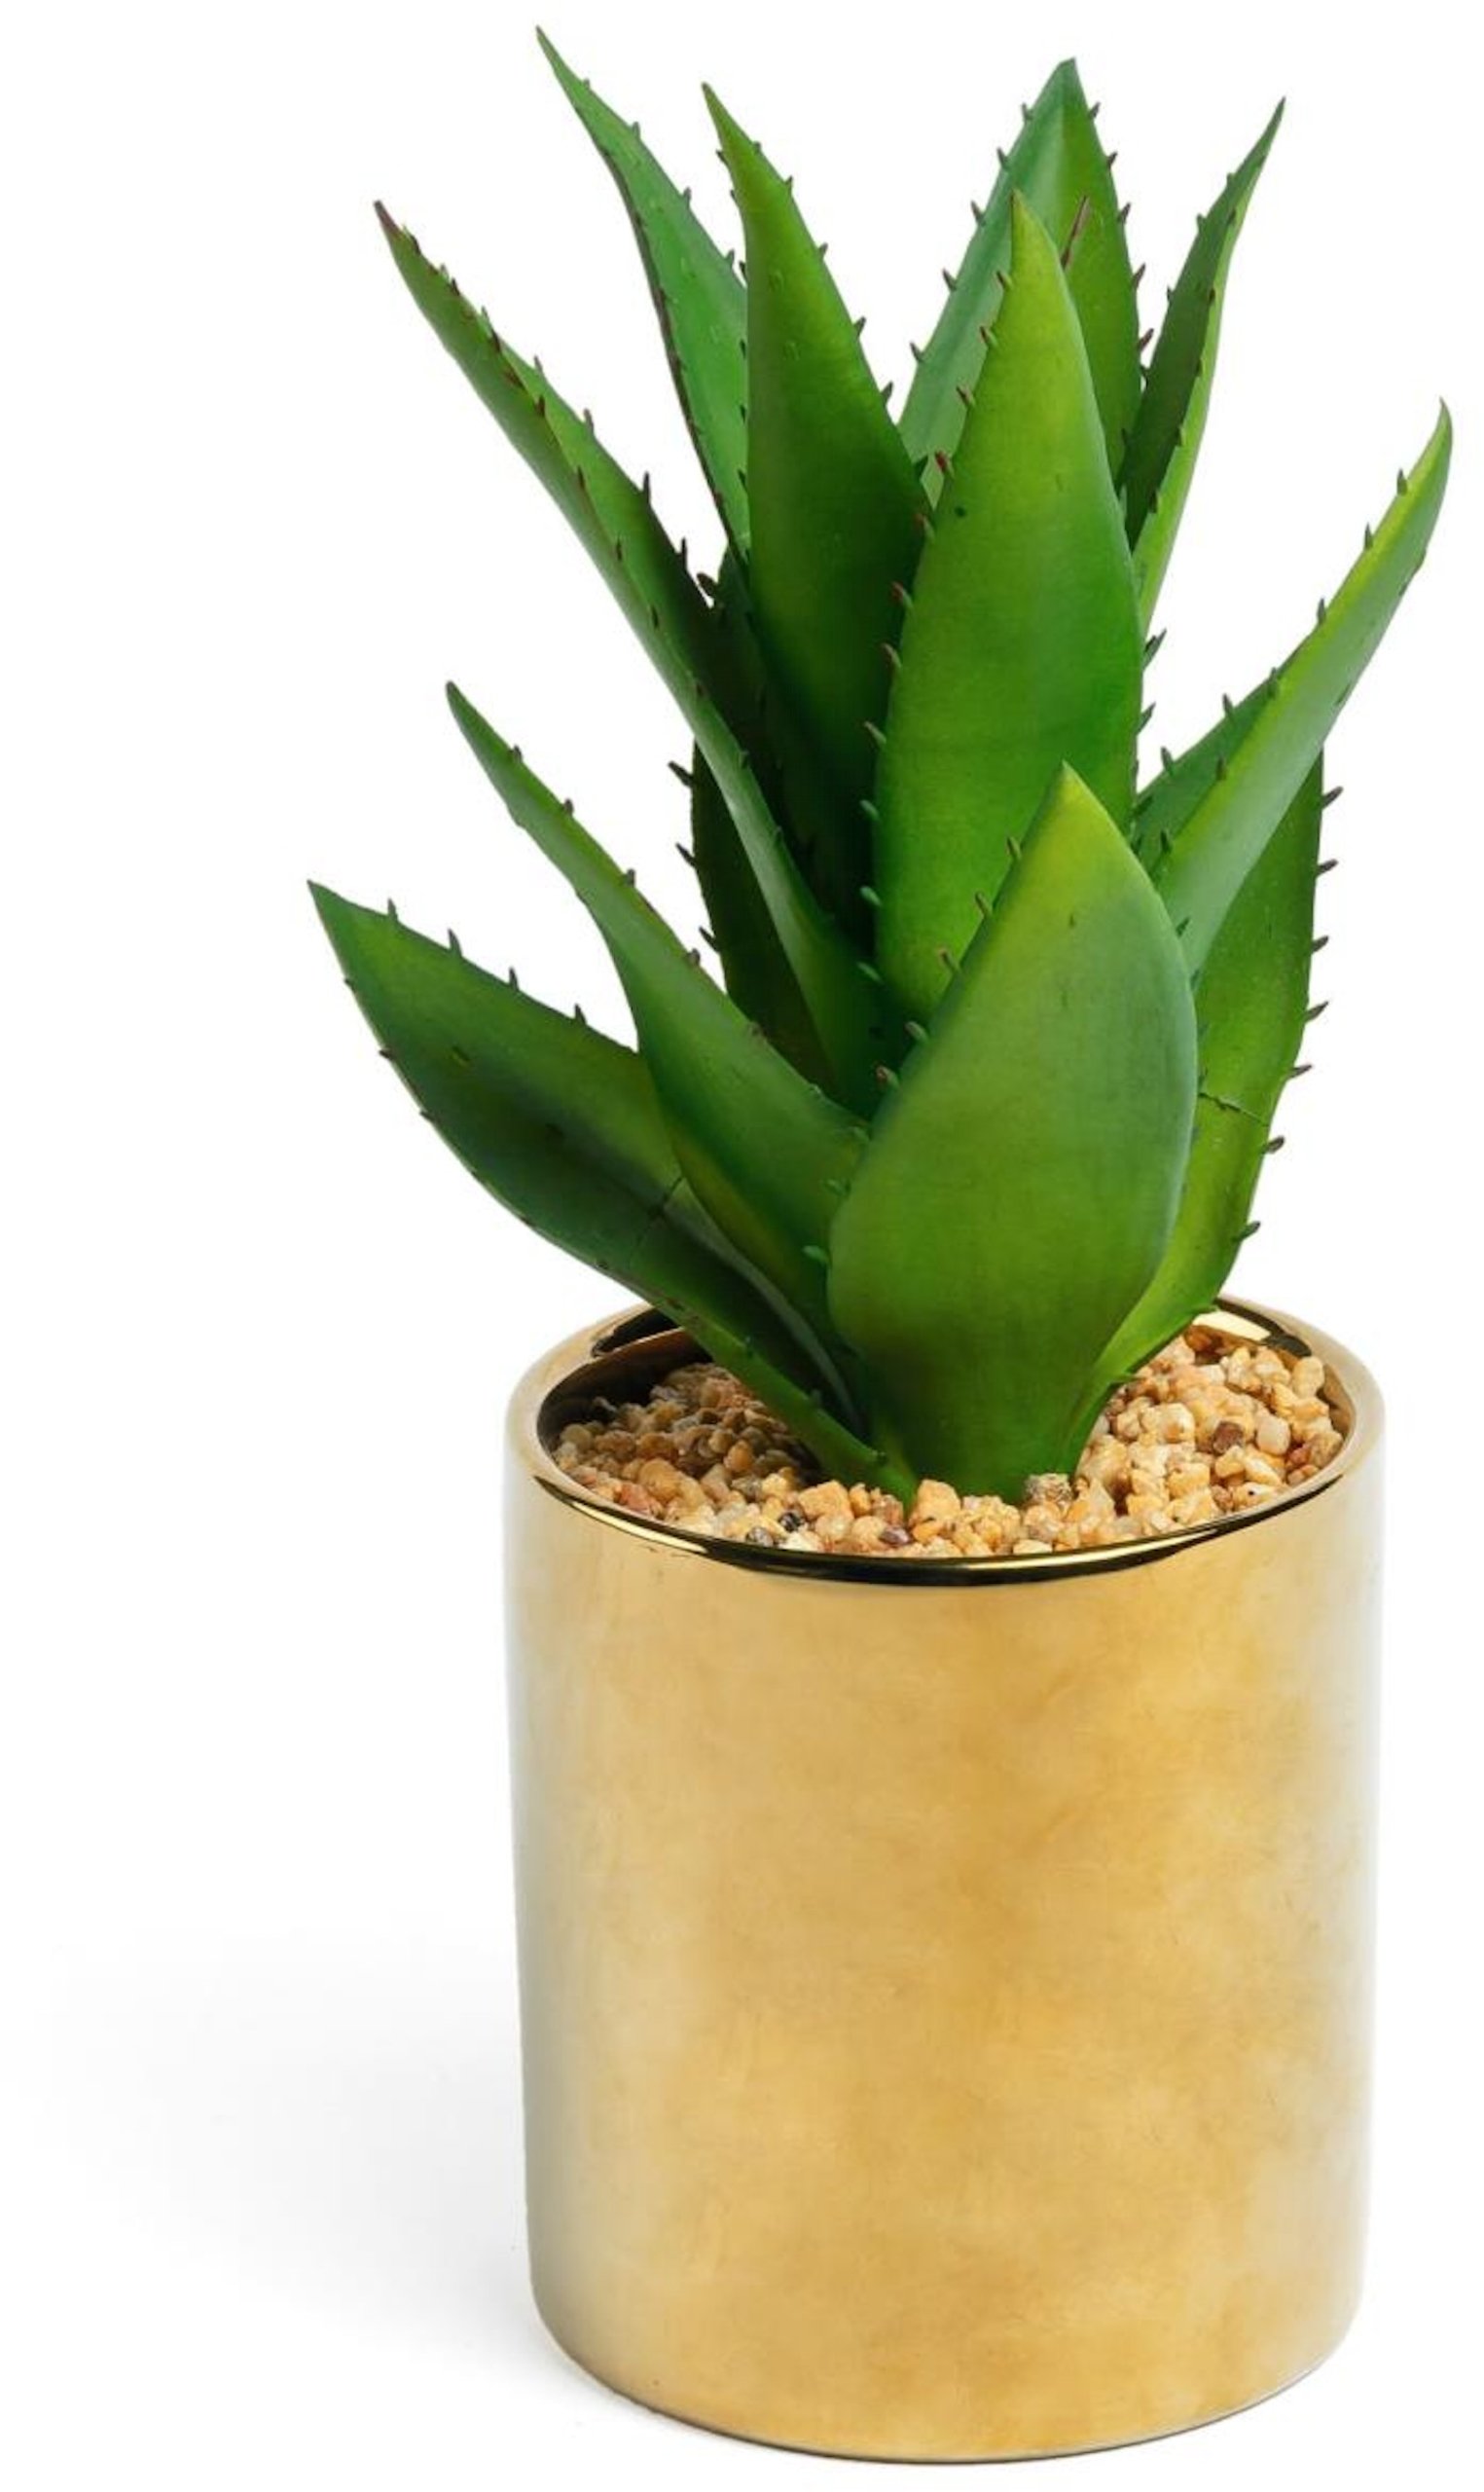 Agave, Kunstig plante, Plast by LaForma (H: 11 cm. x B: 20 cm. x L: 20 cm., Guld/Grøn)